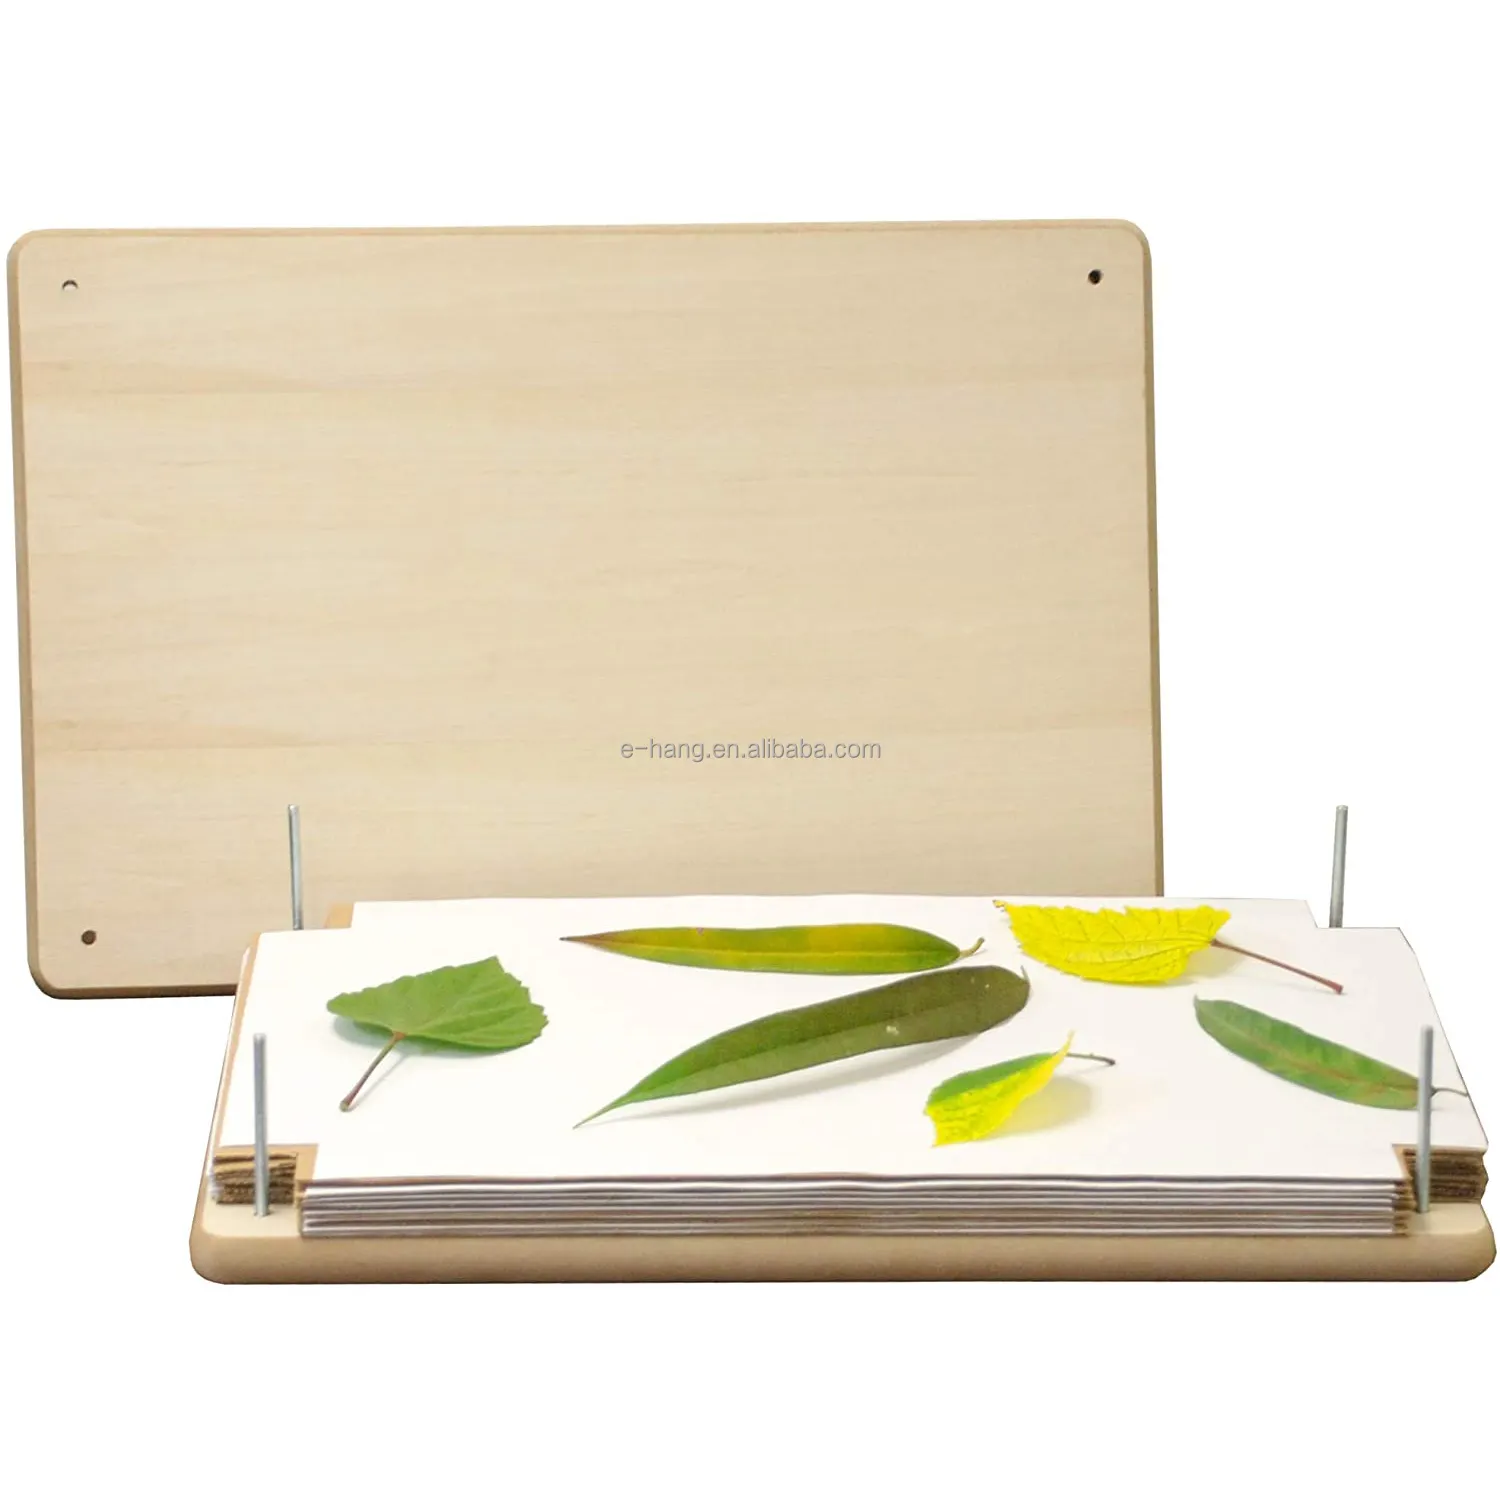 Prensa de hojas y flores de madera de bambú, Kit de prensado de flores de 11x7 pulgadas, prensa Botánica para aprendizaje al aire libre